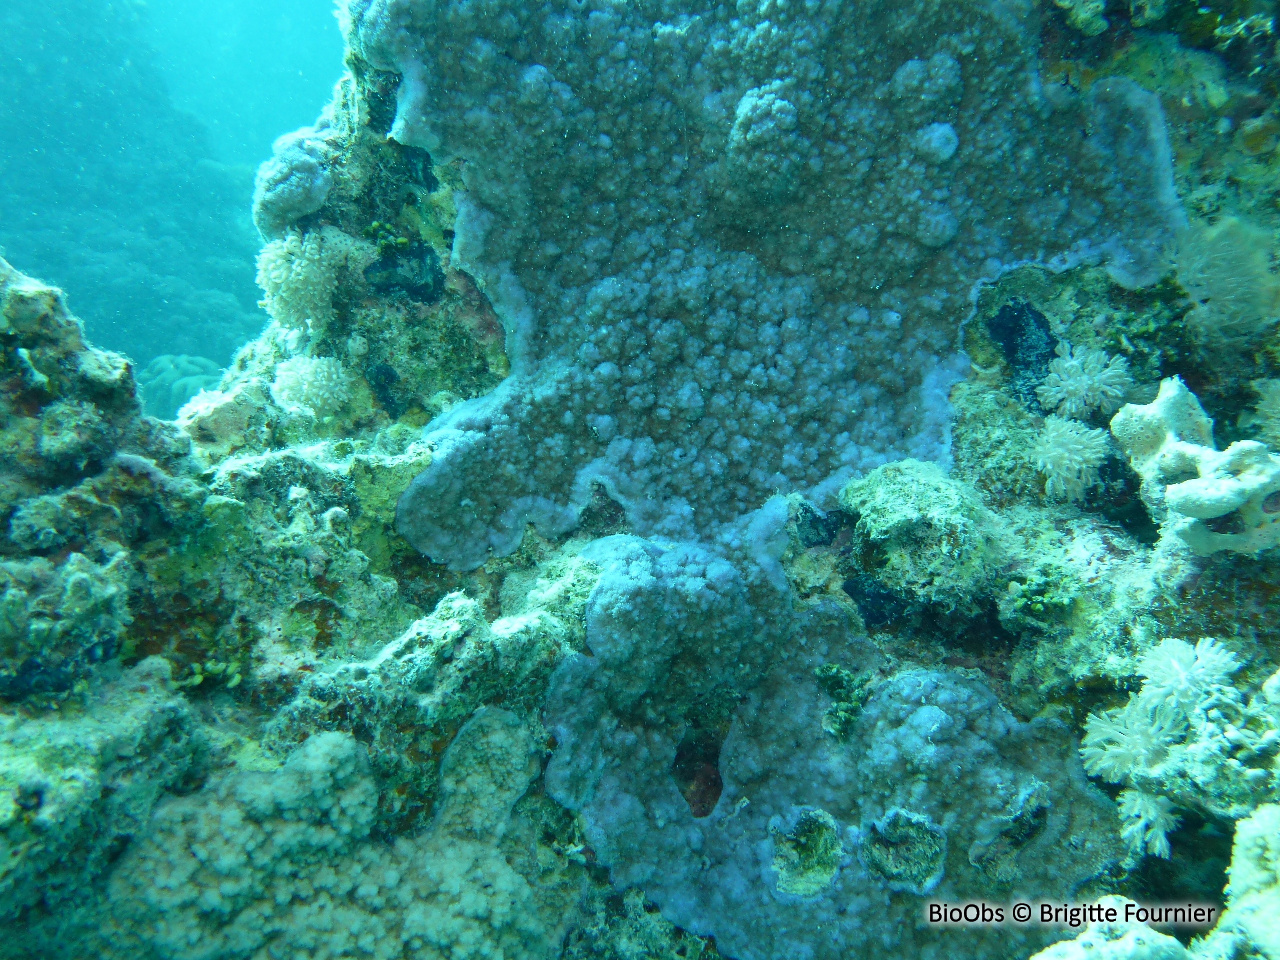 Corail poreux bleu - Montipora efflorescens - Brigitte Fournier - BioObs